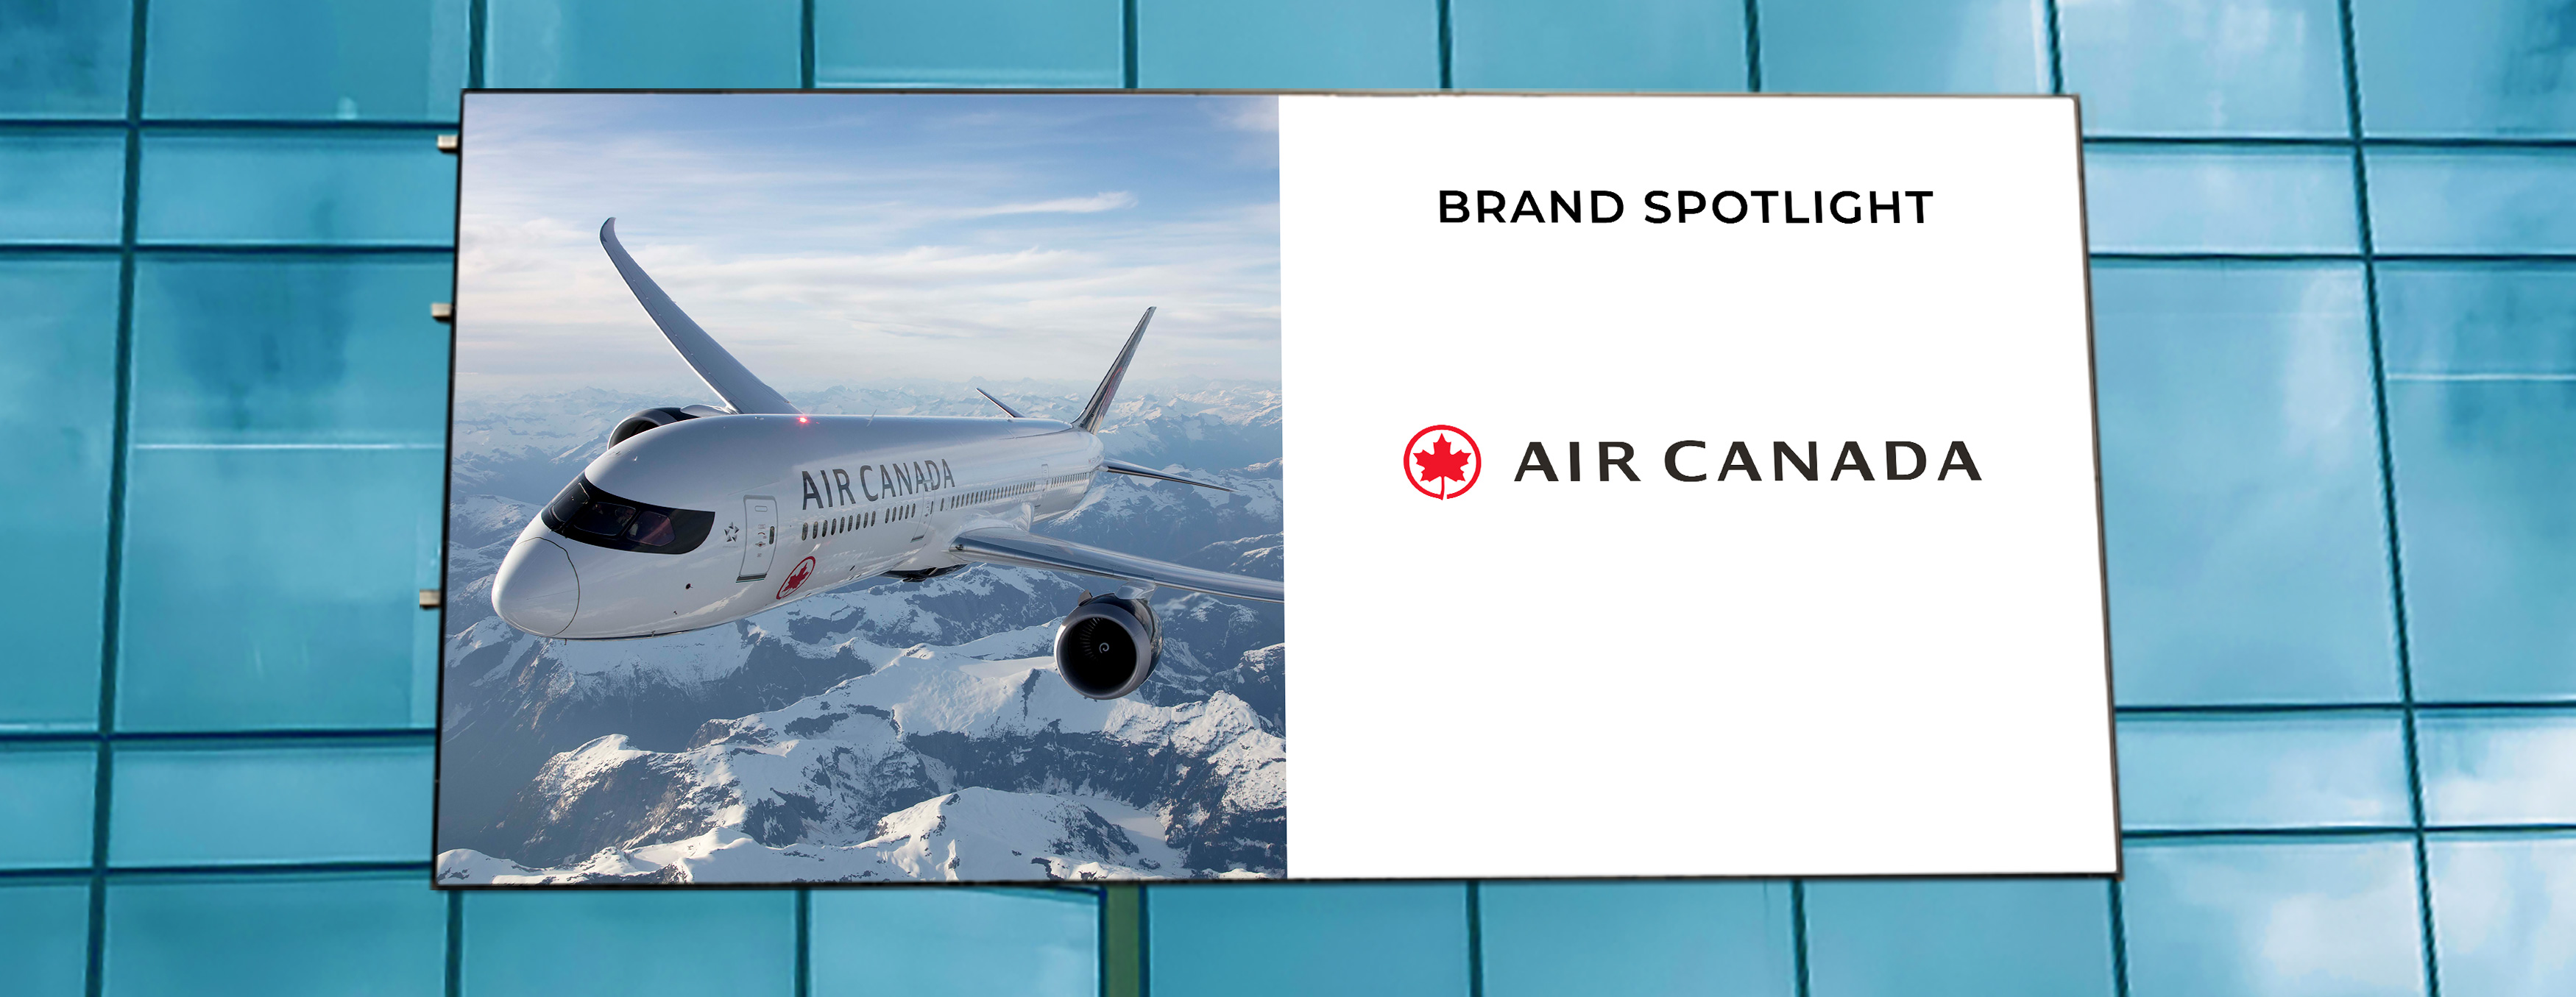 Air Canada brand spotlight blog